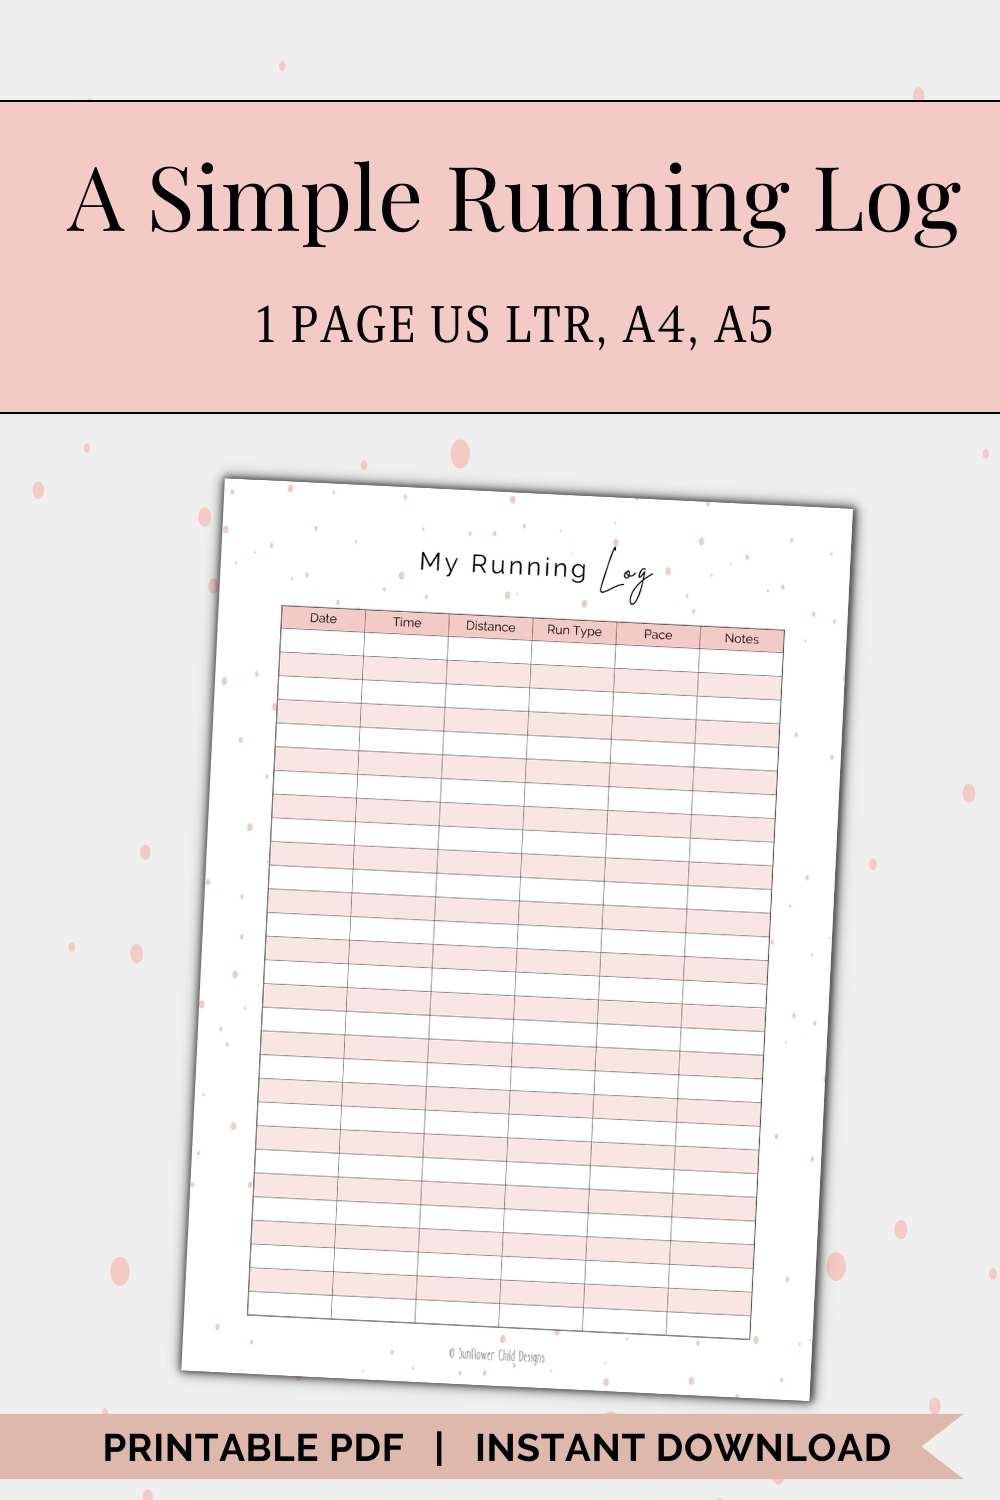 A Simple Running Log | Pink Aesthetic Printable